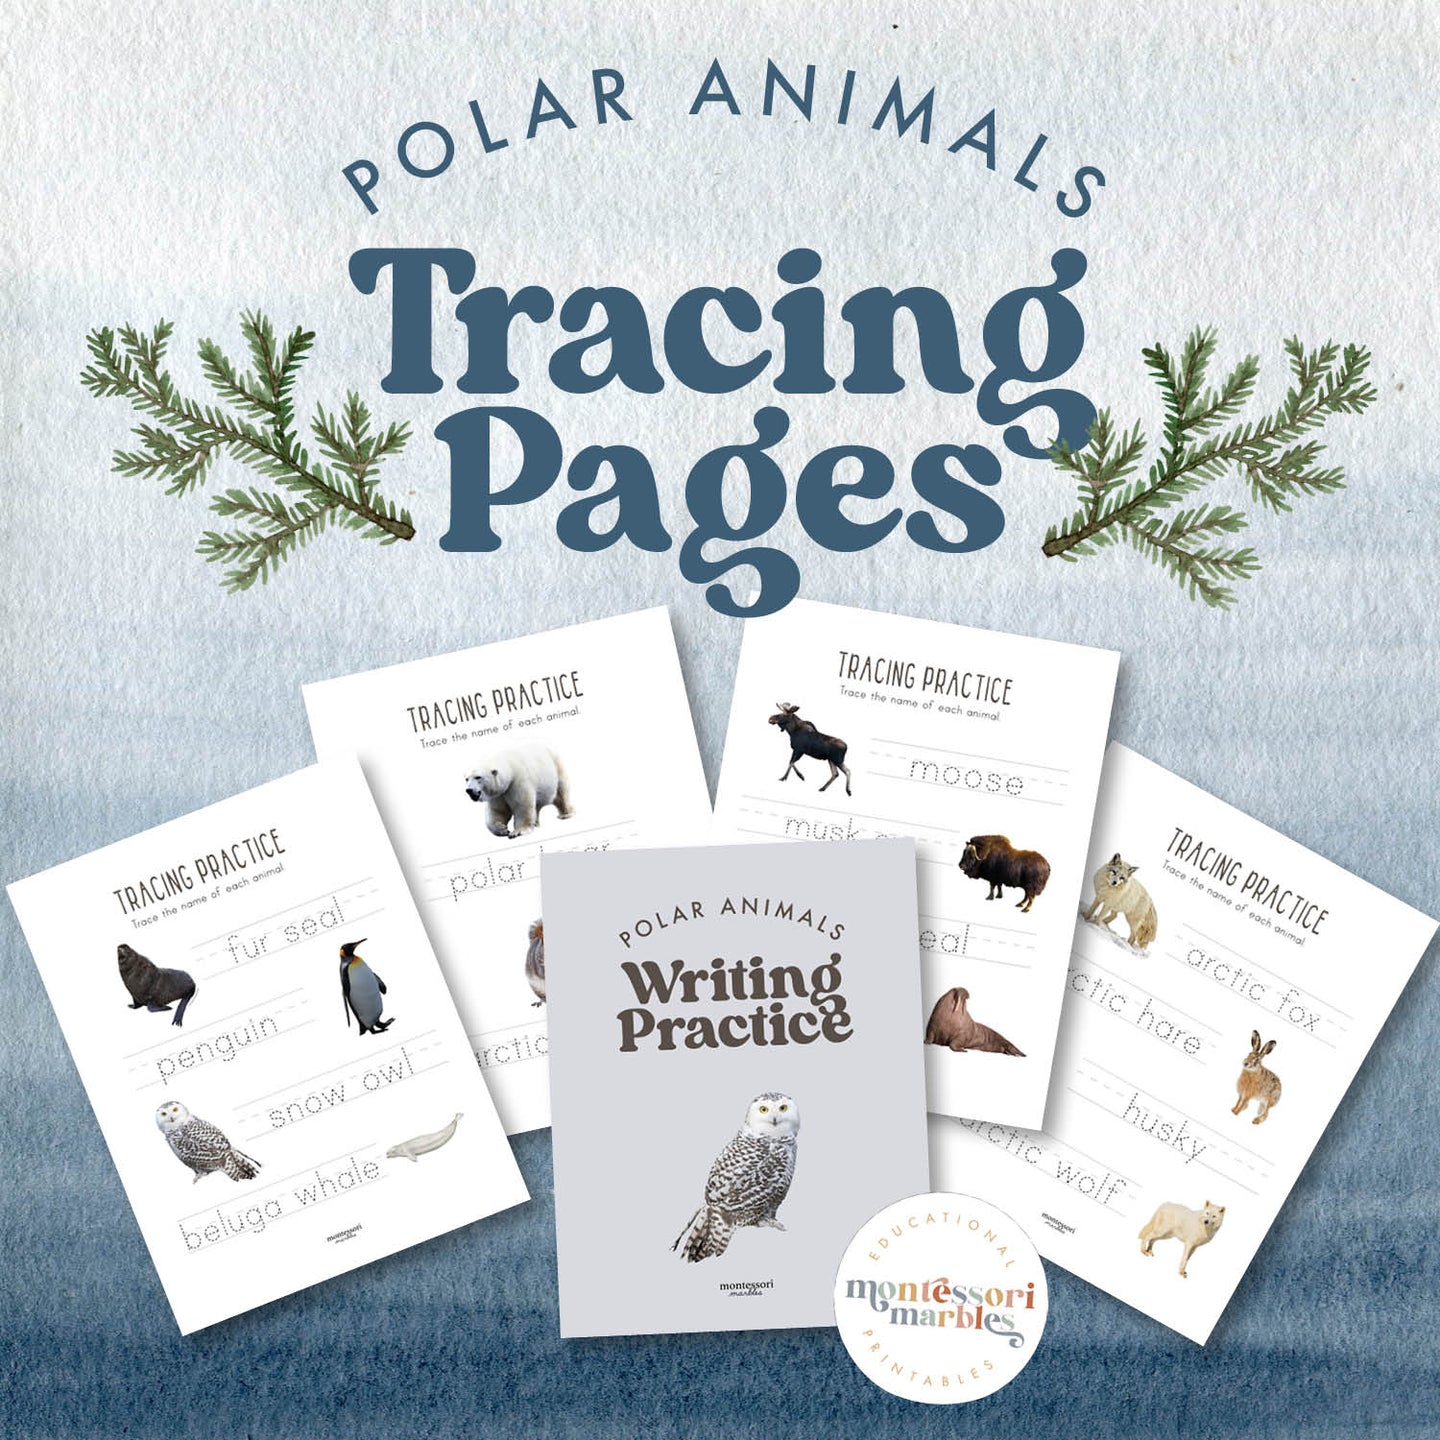 Polar Animals Tracing Practice